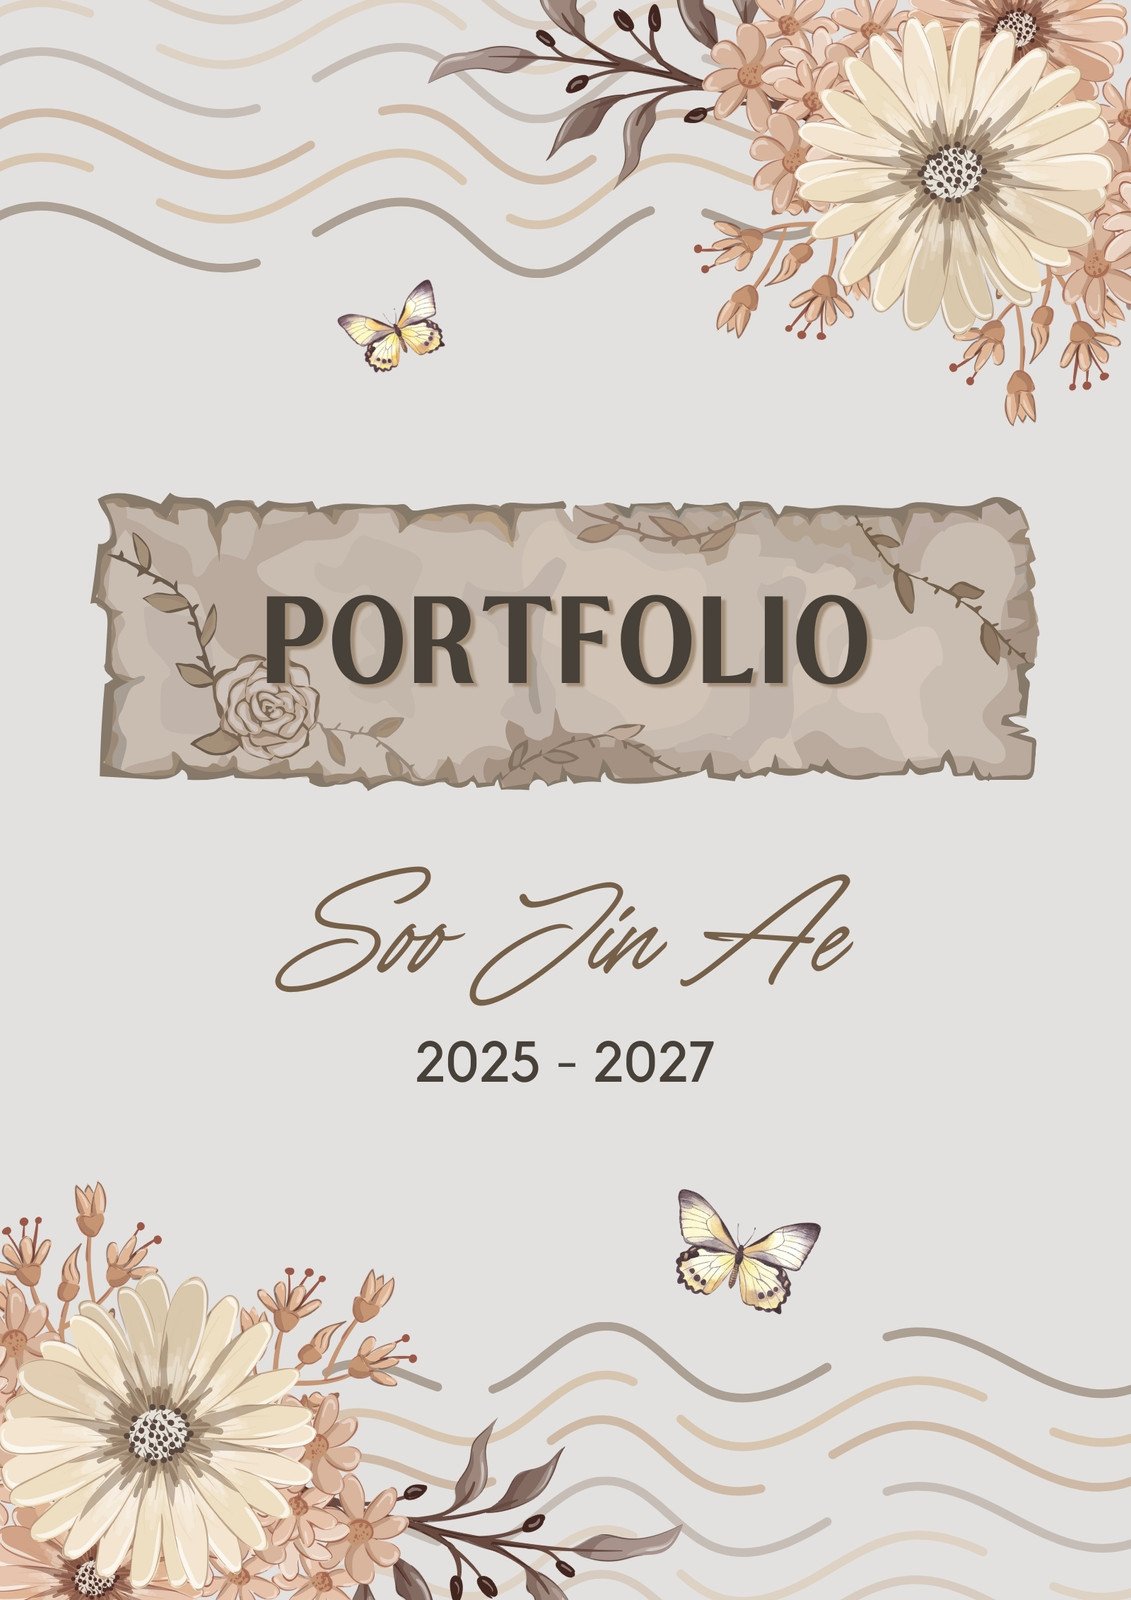 Free and customizable portfolio templates